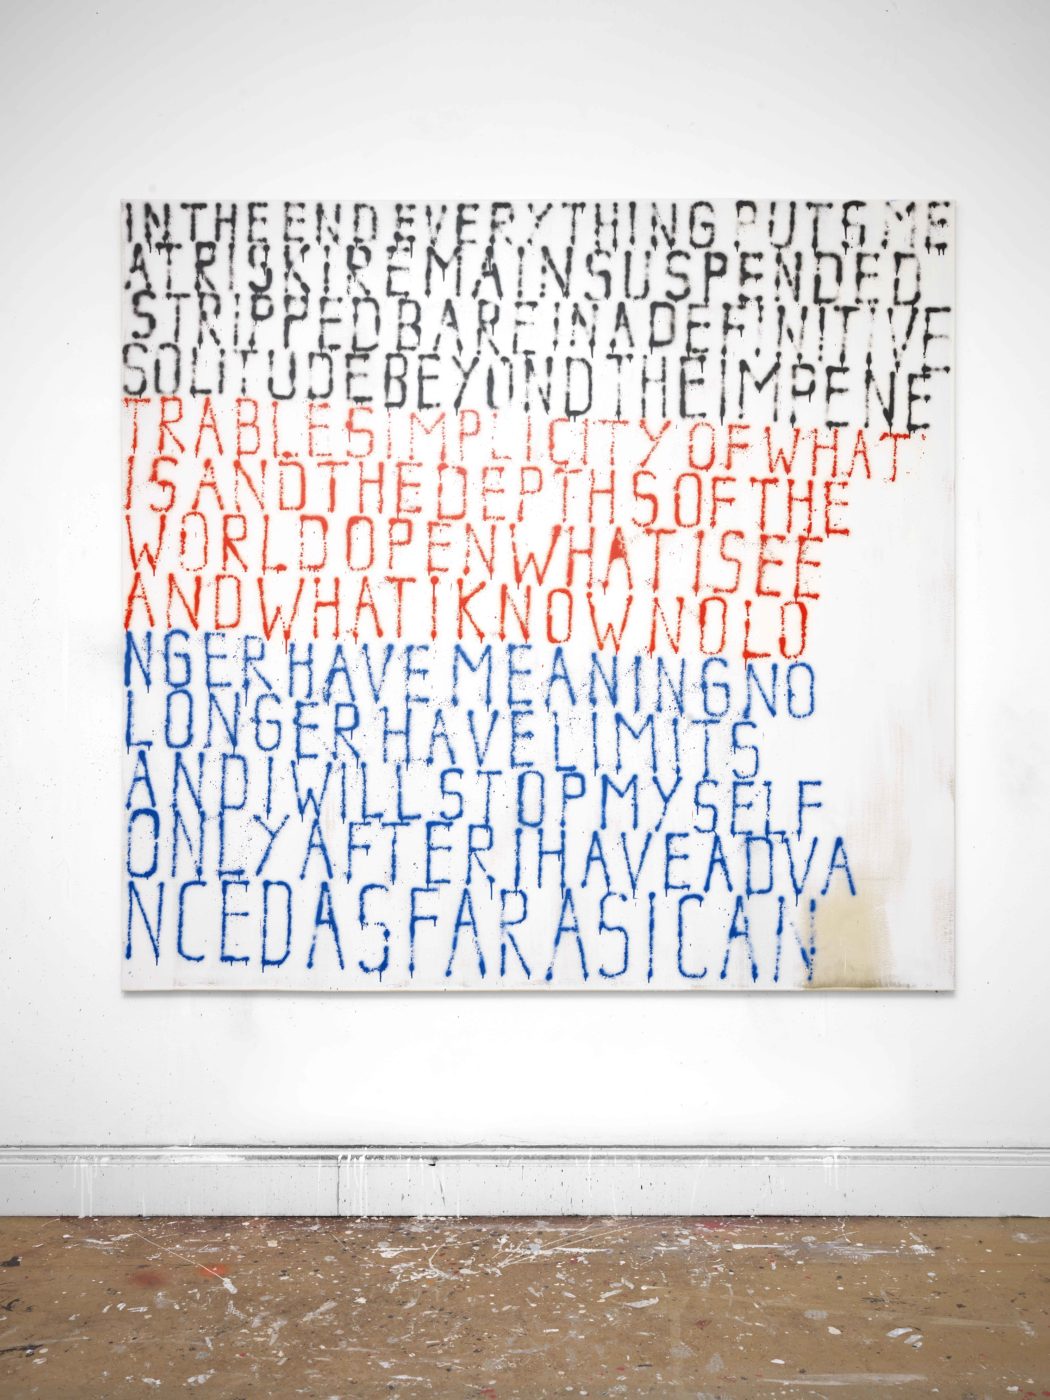 Fabian Herkenhoener, Untitled (everything puts me at risk), 2018, polvere, legante acrilico, vernice, vernice spray su tela, 180 × 190 cm